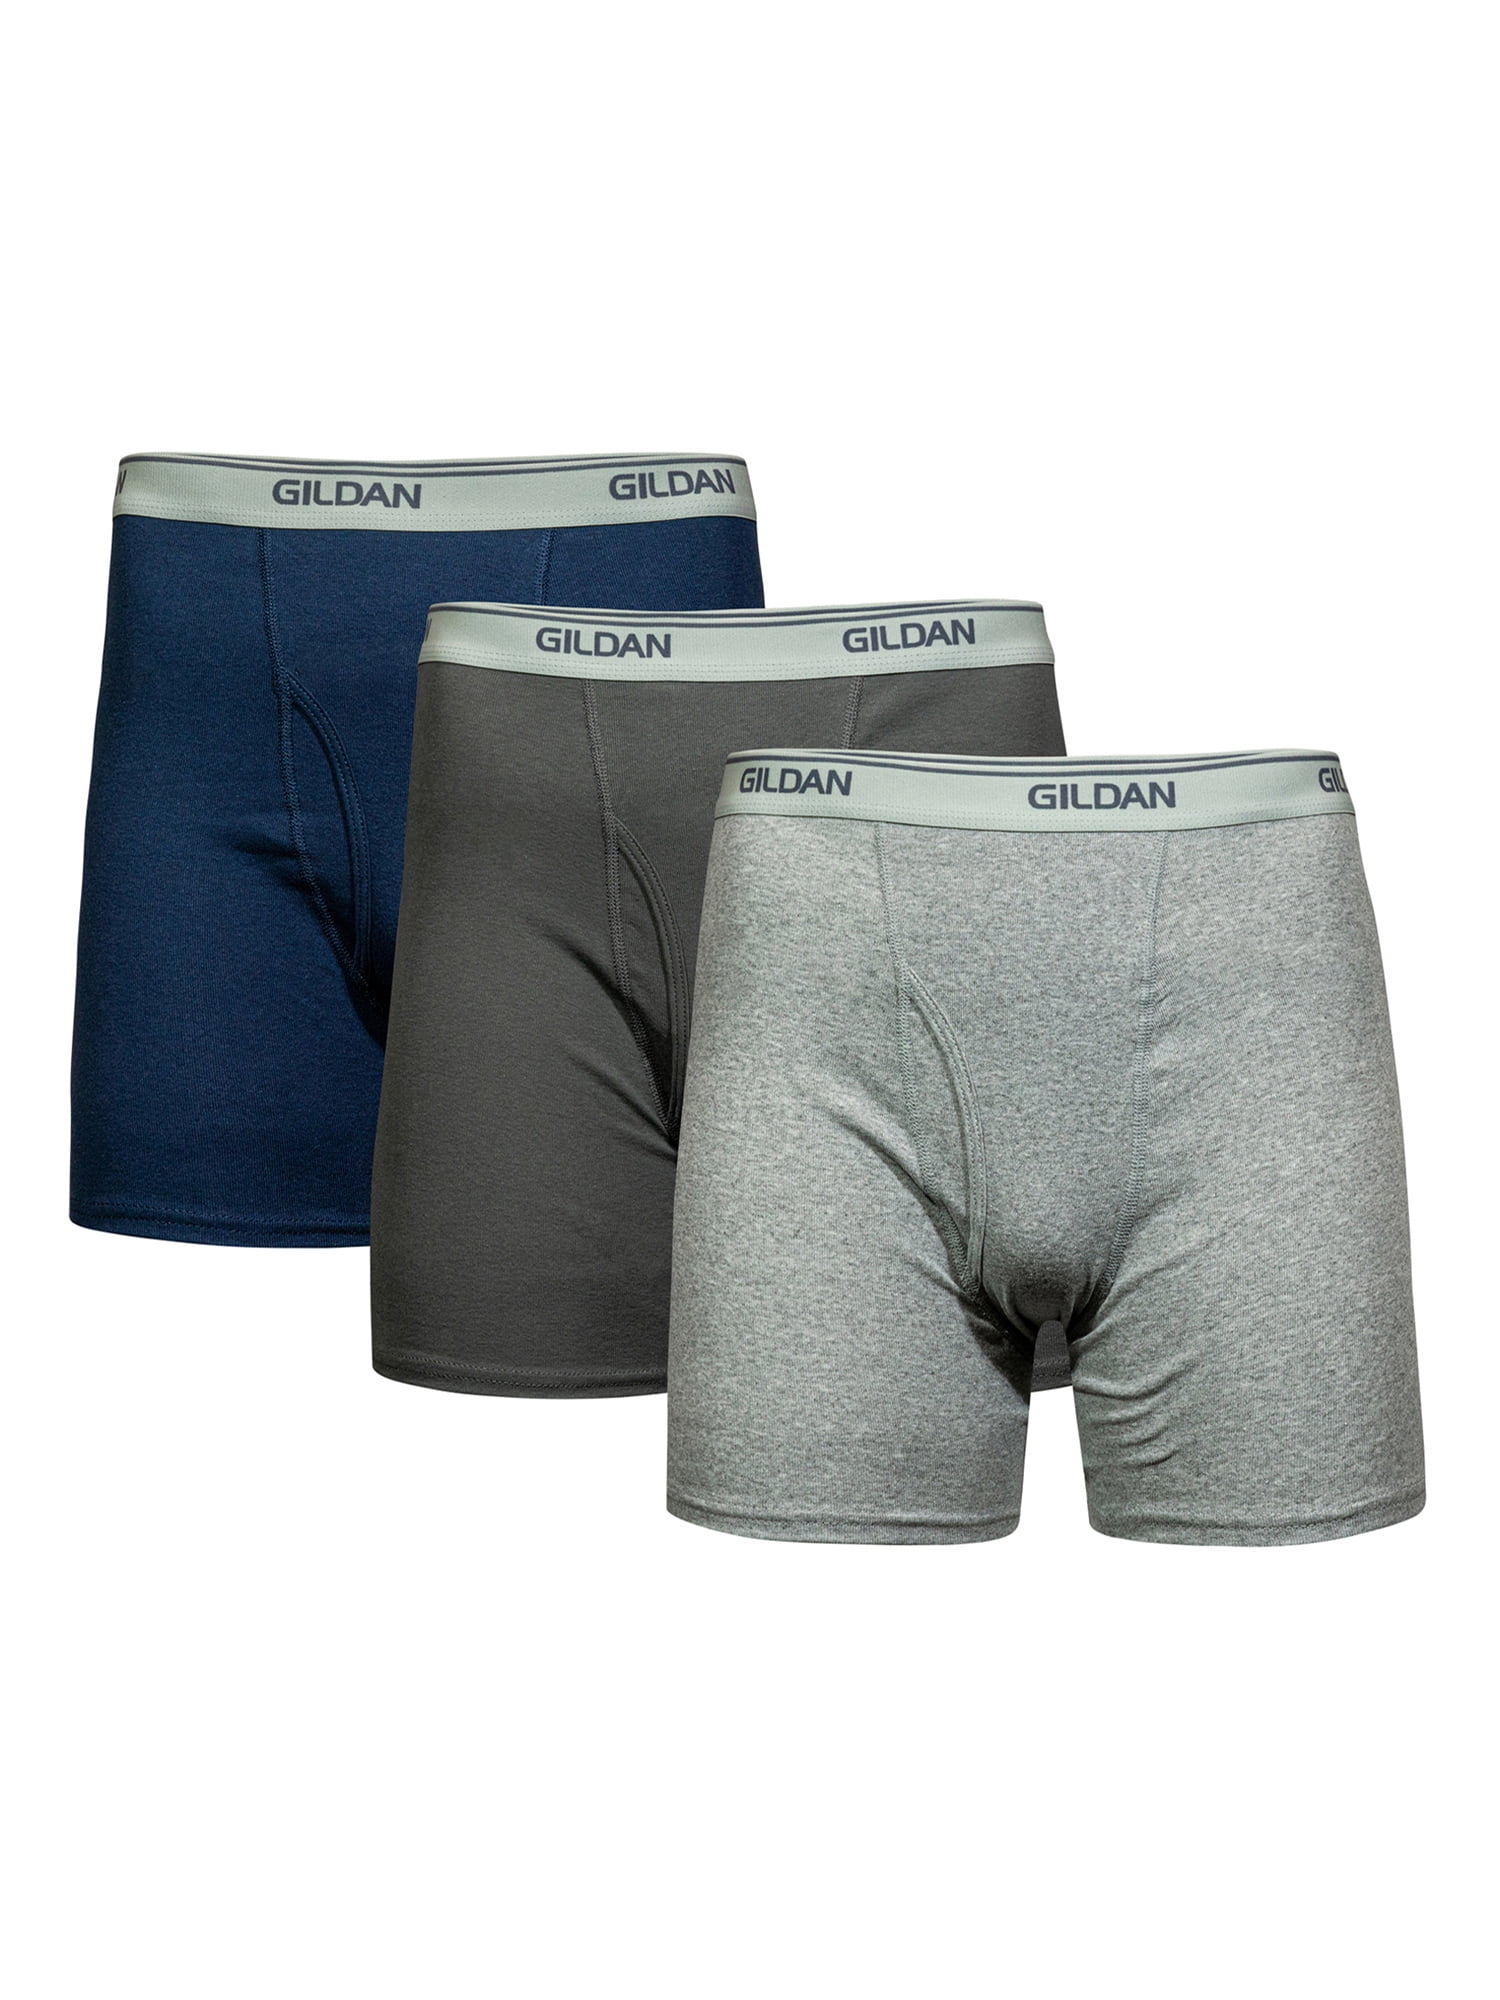 Gildan Men's Boxer Briefs, 3-Pack - Walmart.com